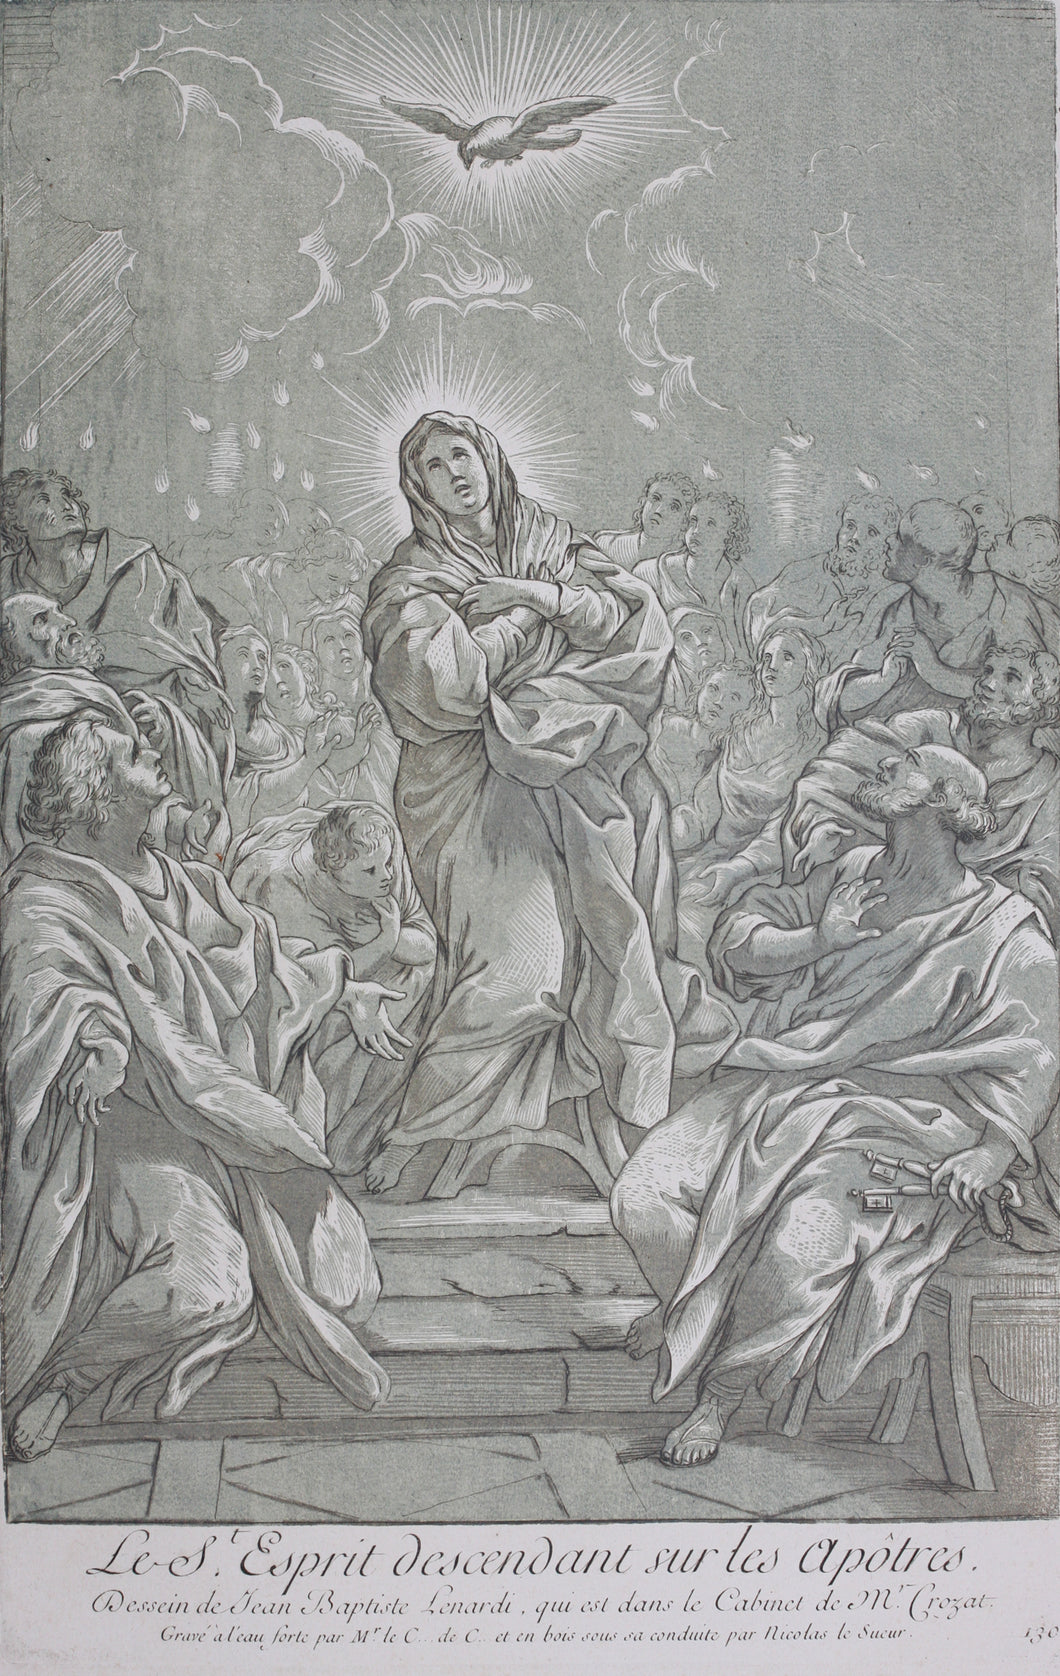 Giovanni Battista Lenardi, after. The Pentecost. Engraving by Anne Claude de Caylus. 1742.